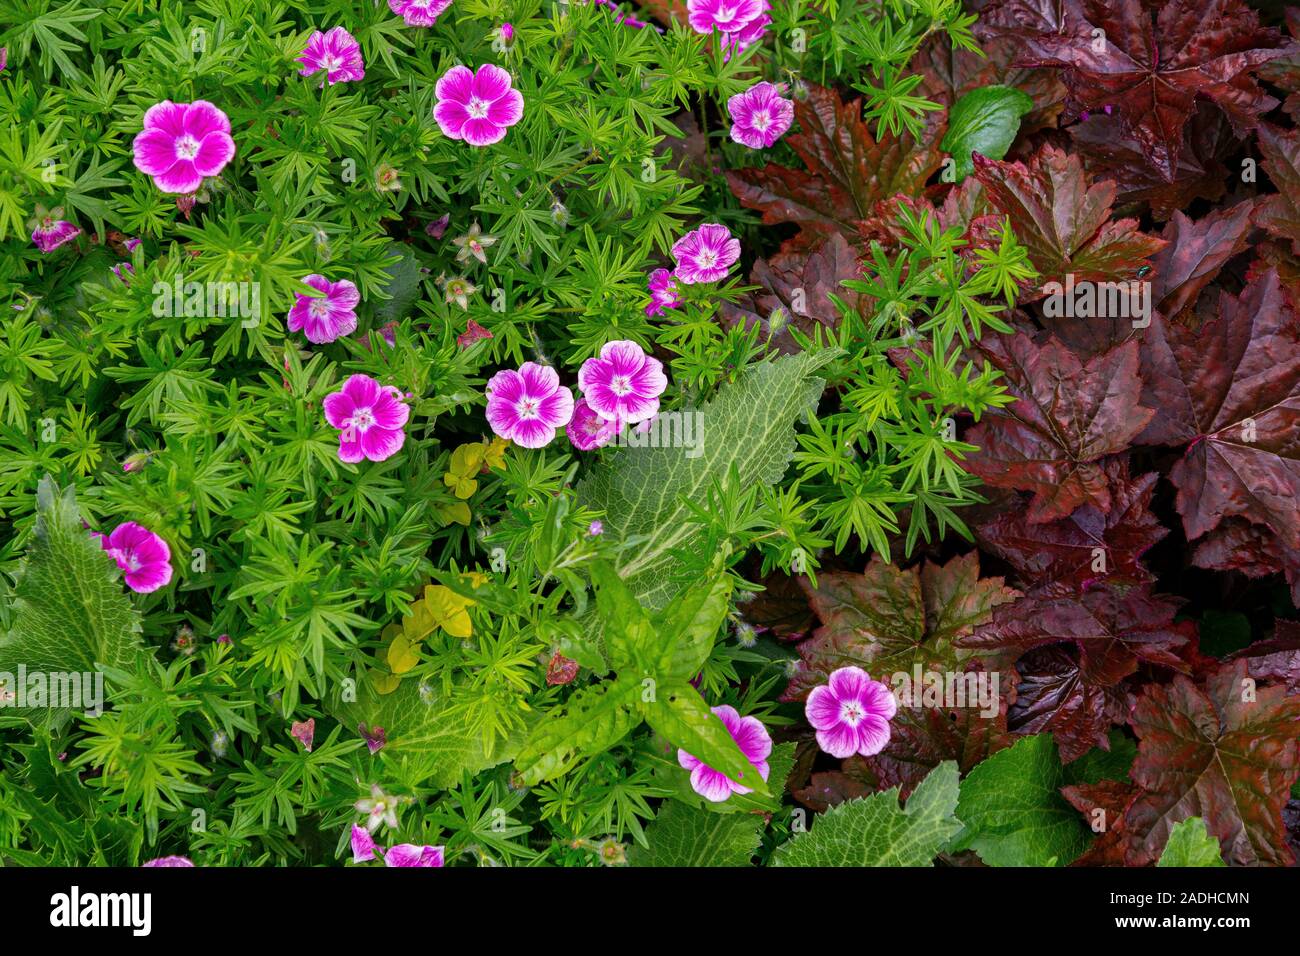 Geranium sanguineum 'Elke' with Heuchera foliage Stock Photo